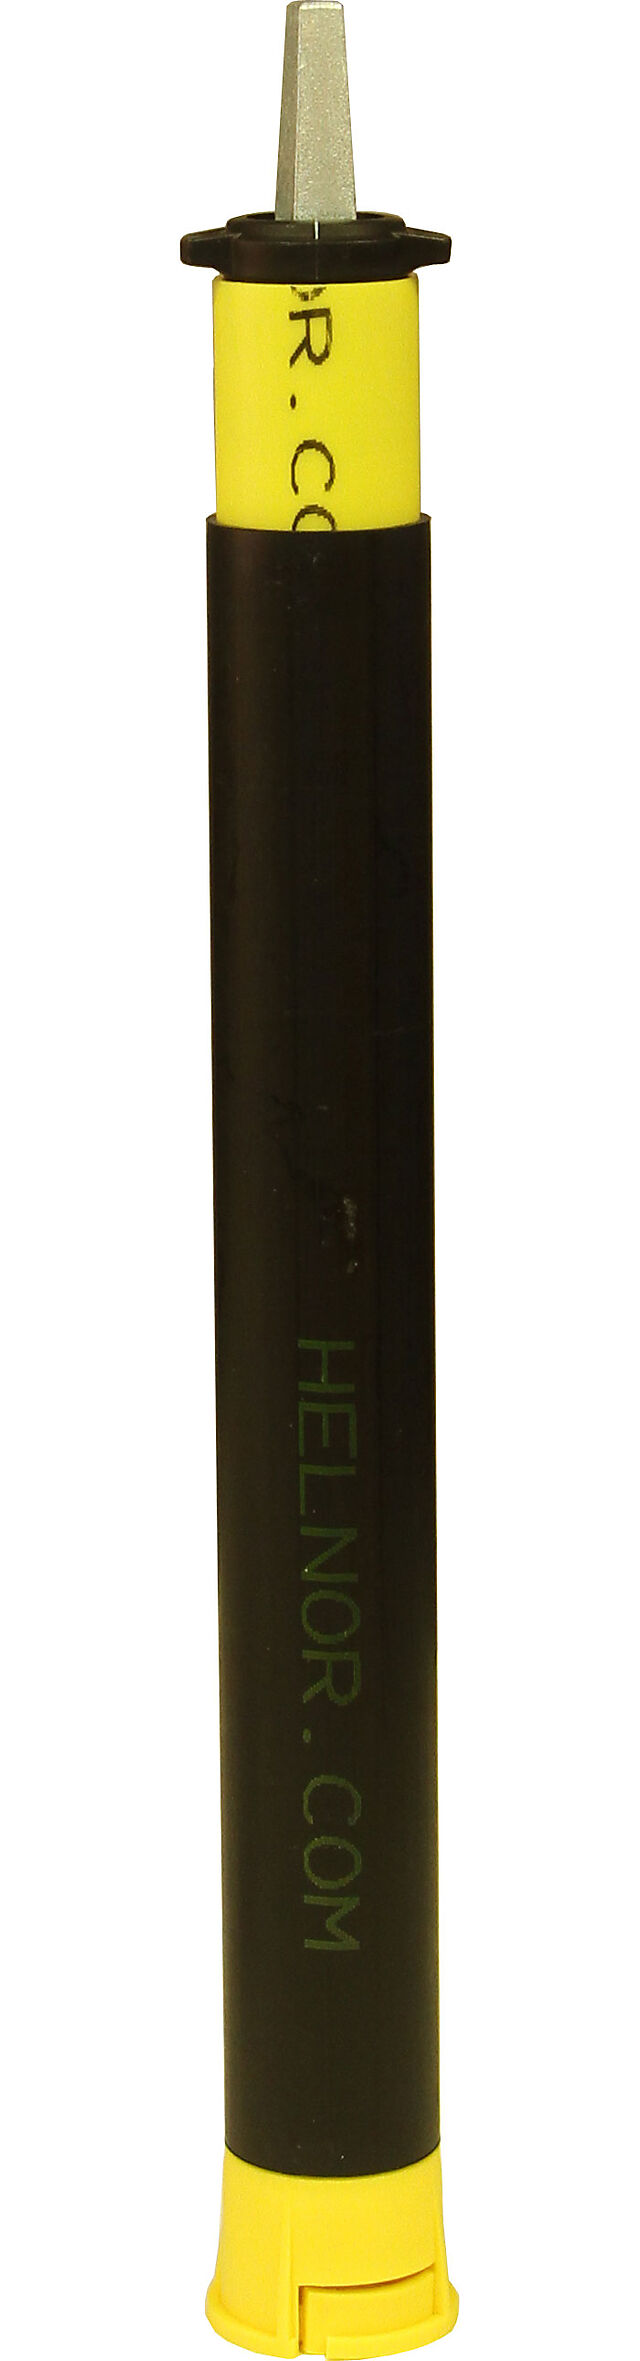 Helnor Spindelforlenger 90 - 149 cm XS1 Helnor 1